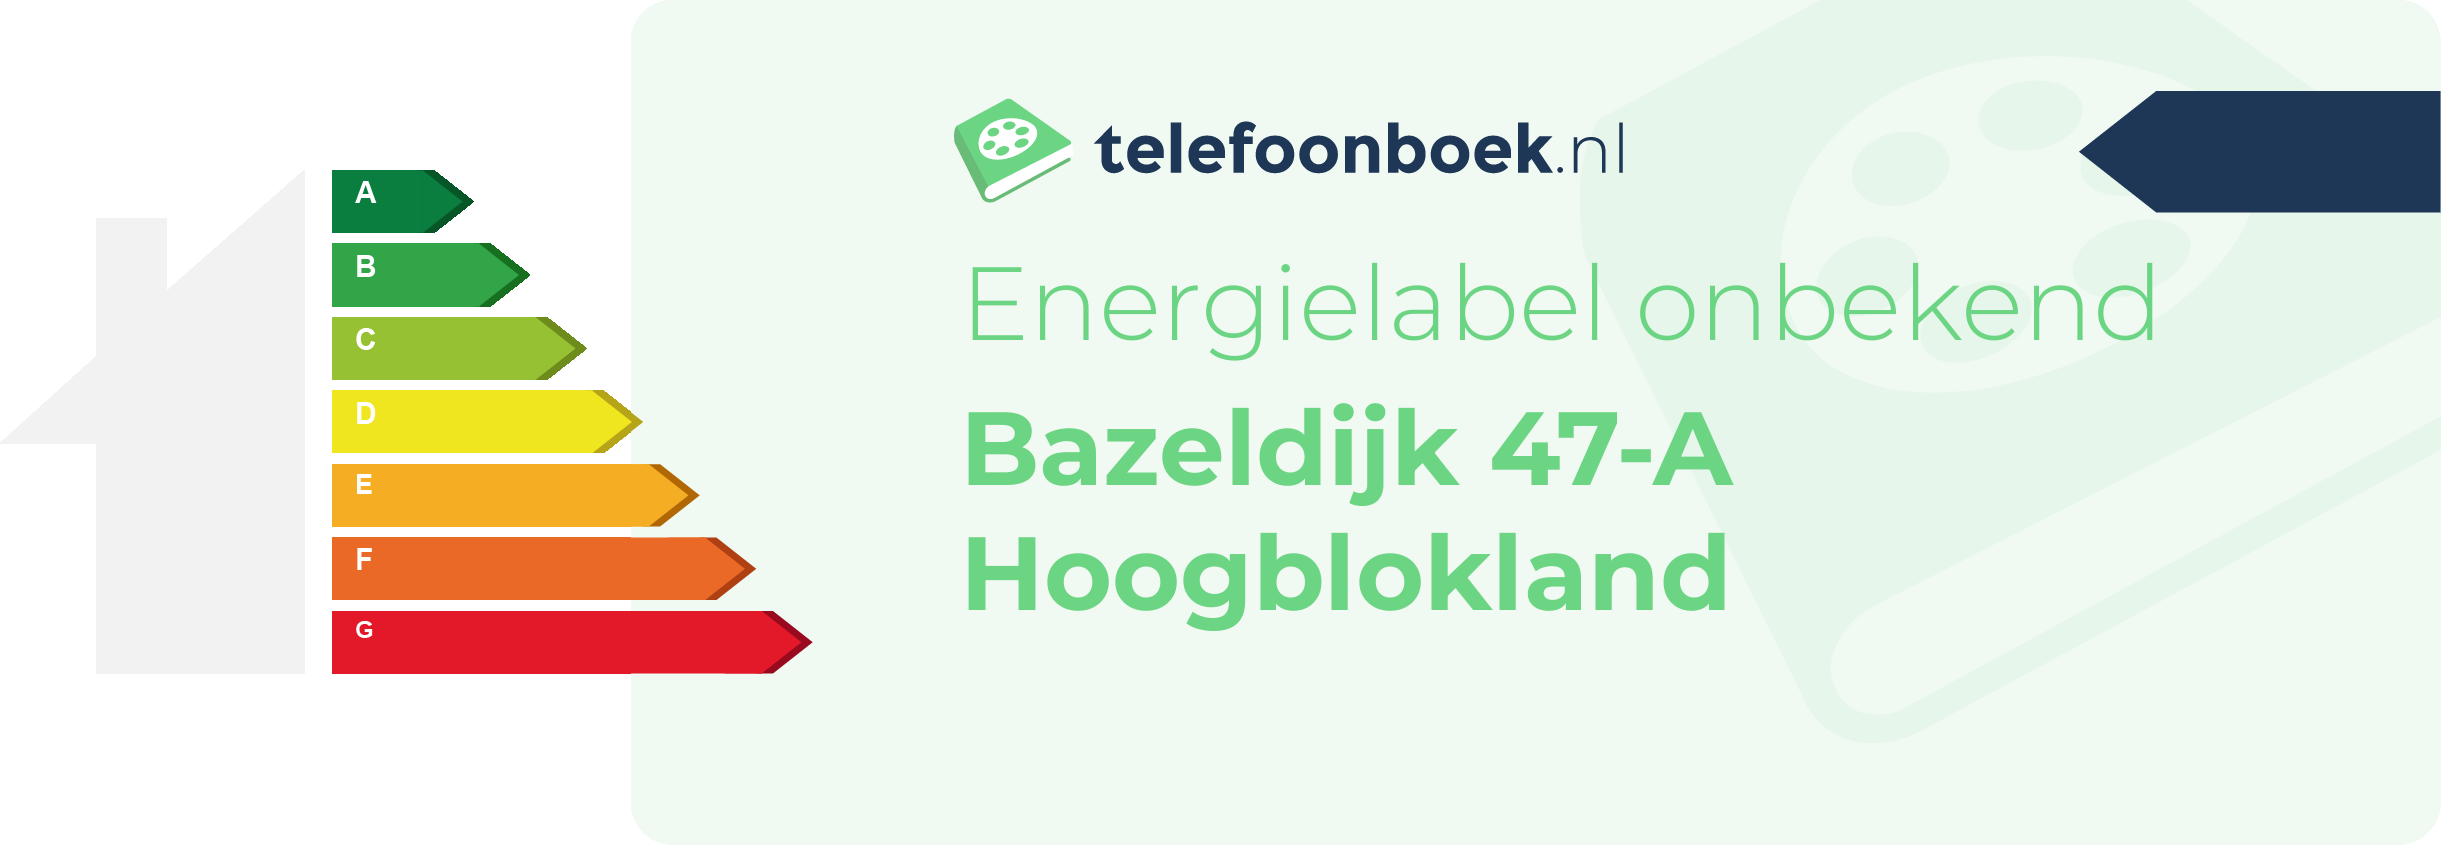 Energielabel Bazeldijk 47-A Hoogblokland